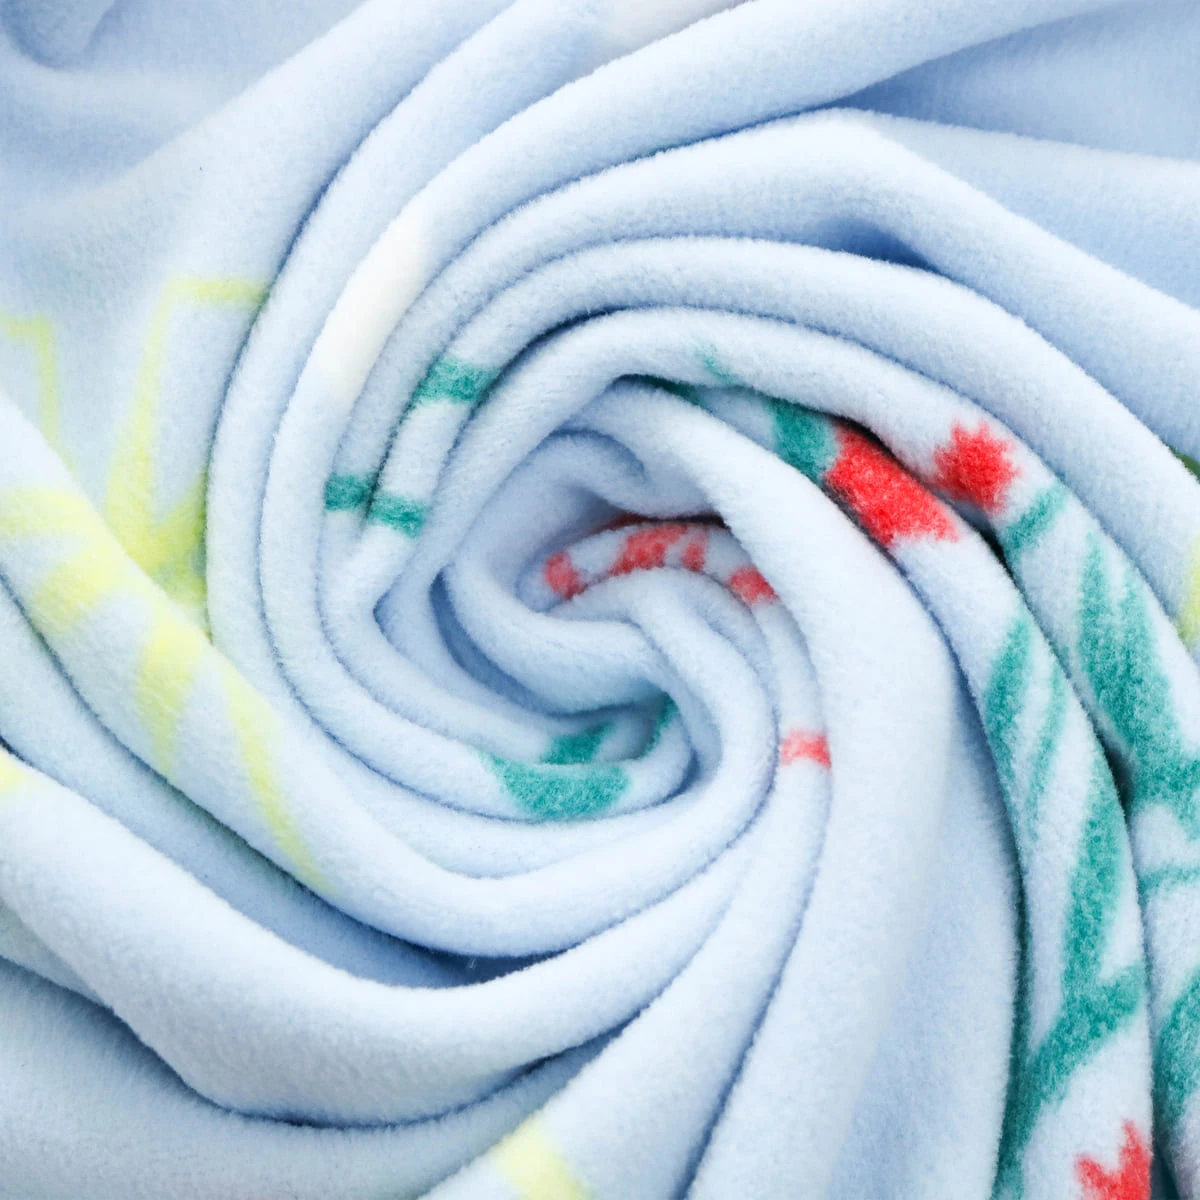 Angel Snow Printed Fleece Baby Blanket with Binding Edging (Blue)